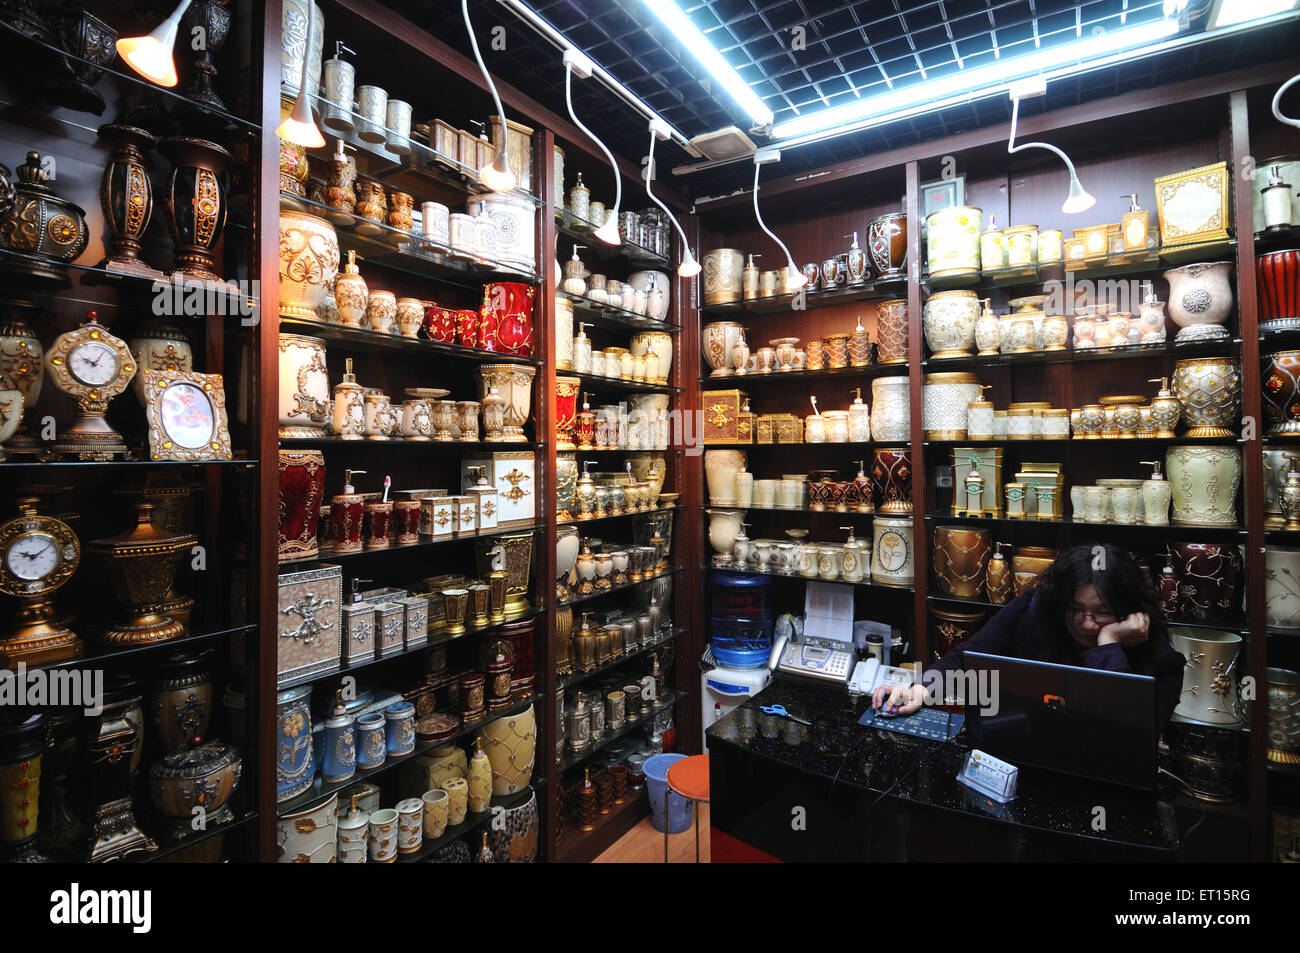 Display of ceramic items in chinese shop ; Yiwu ; China Stock Photo